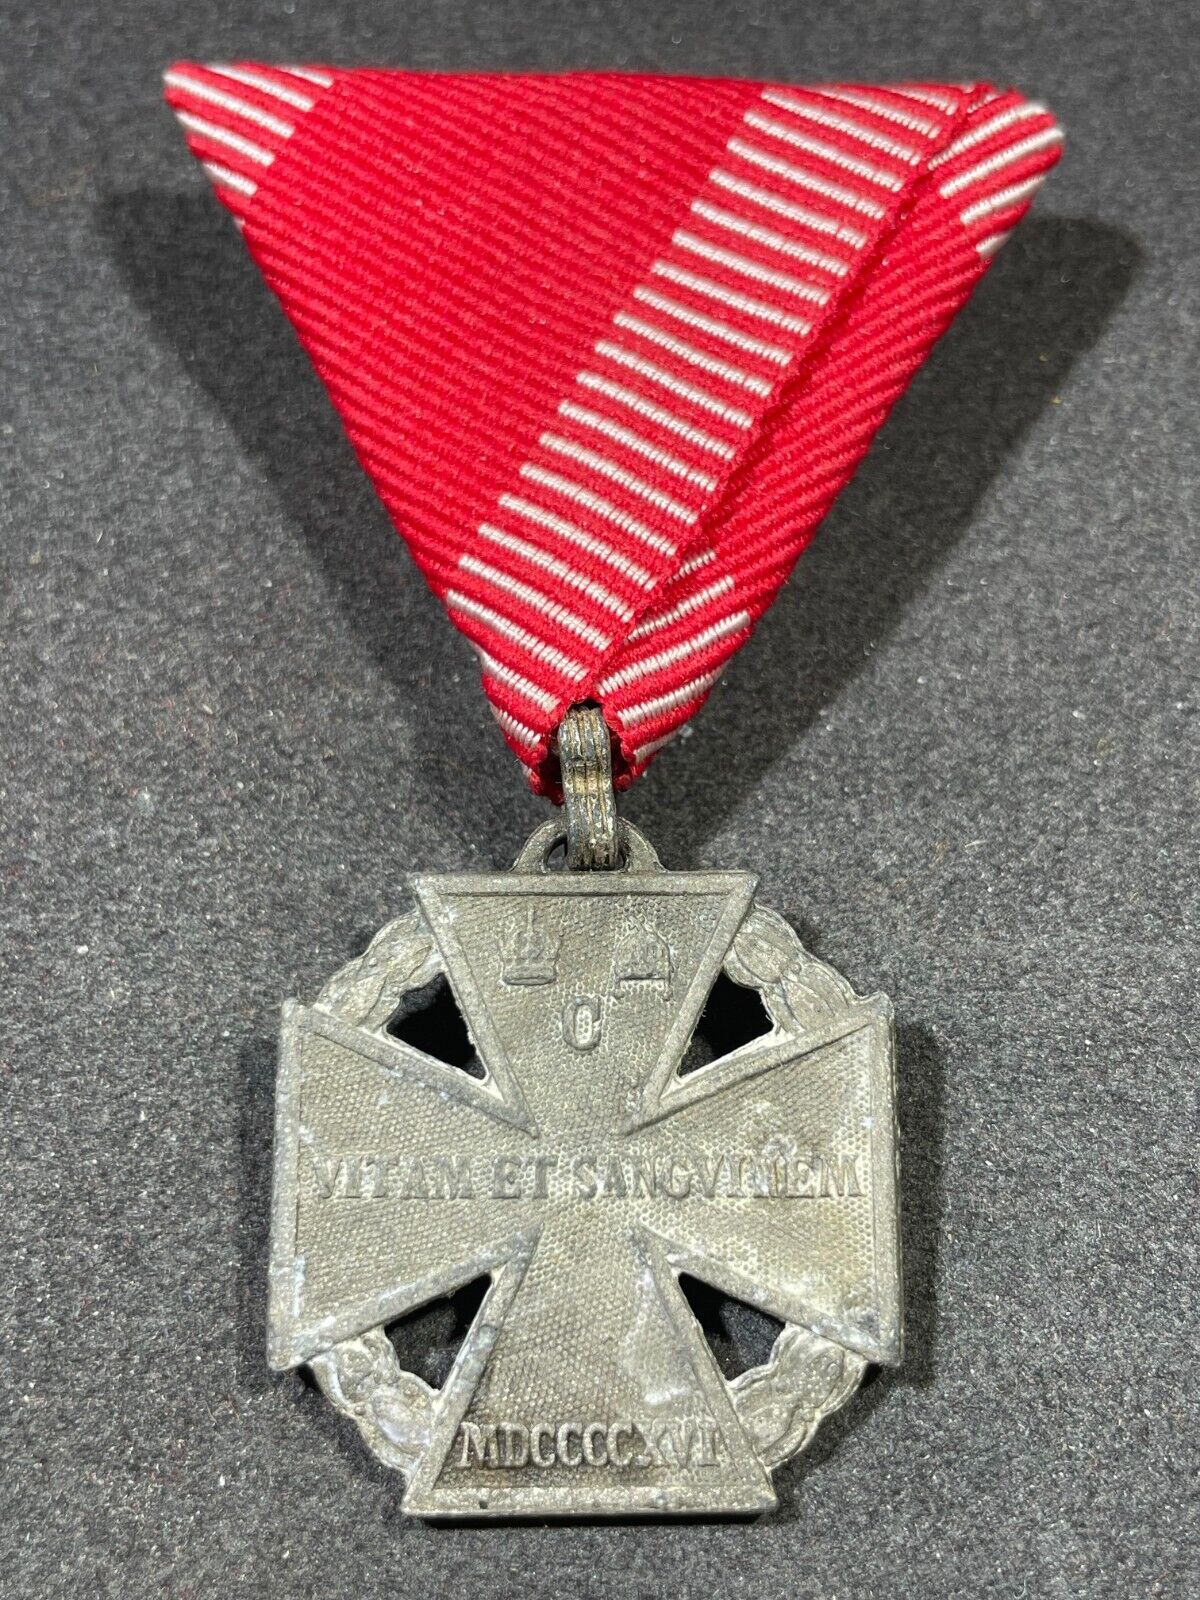 WW1 WWI Imperial Austrian Austro-Hungarian Army Military Karl Troop Cross Medal